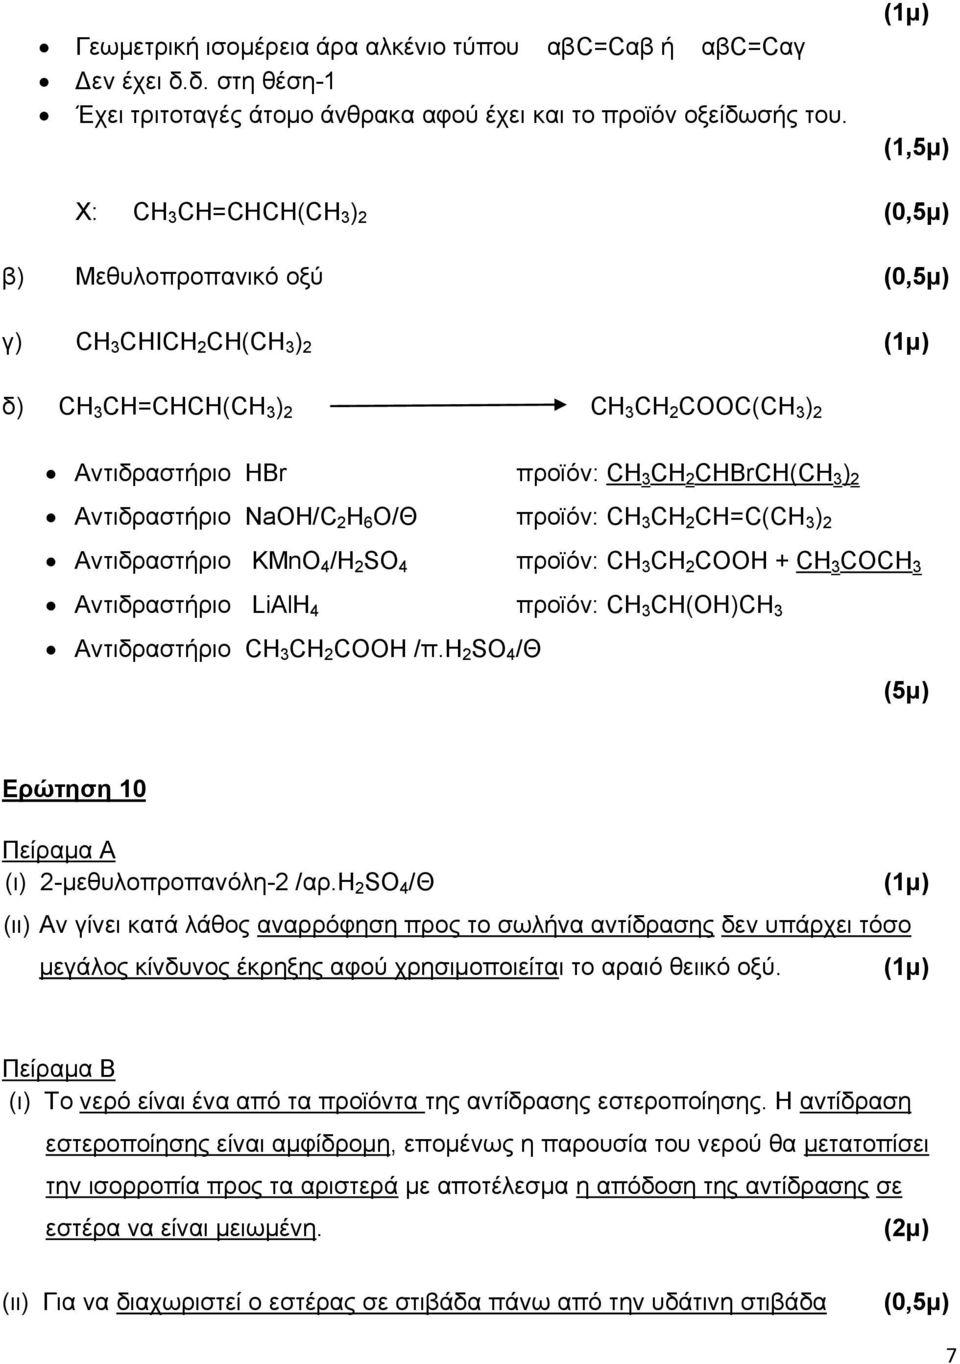 NaOH/C 2 H 6 O/Θ προϊόν: CH 3 CH 2 CH=C(CH 3 ) 2 Αντιδραστήριο KMnO 4 /H 2 SO 4 προϊόν: CH 3 CH 2 COOH + CH 3 COCH 3 Αντιδραστήριο LiAlH 4 προϊόν: CH 3 CH(OH)CH 3 Αντιδραστήριο CH 3 CH 2 COOH /π.